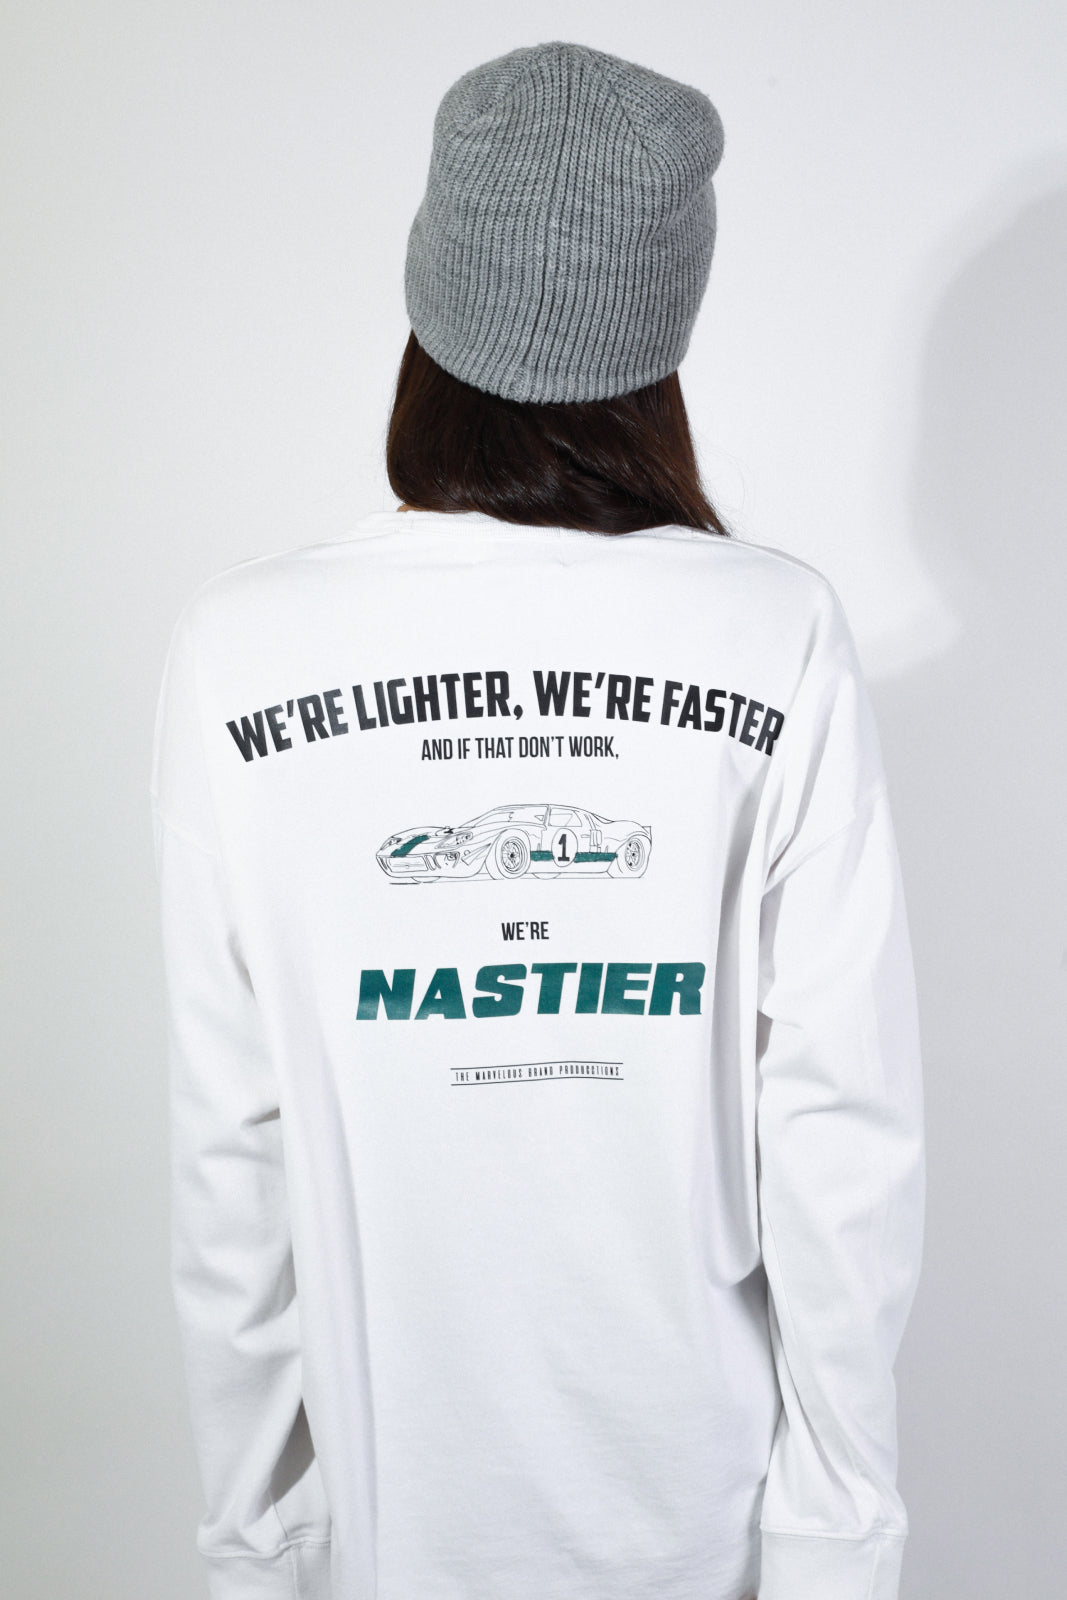 Faster &amp; Nastier